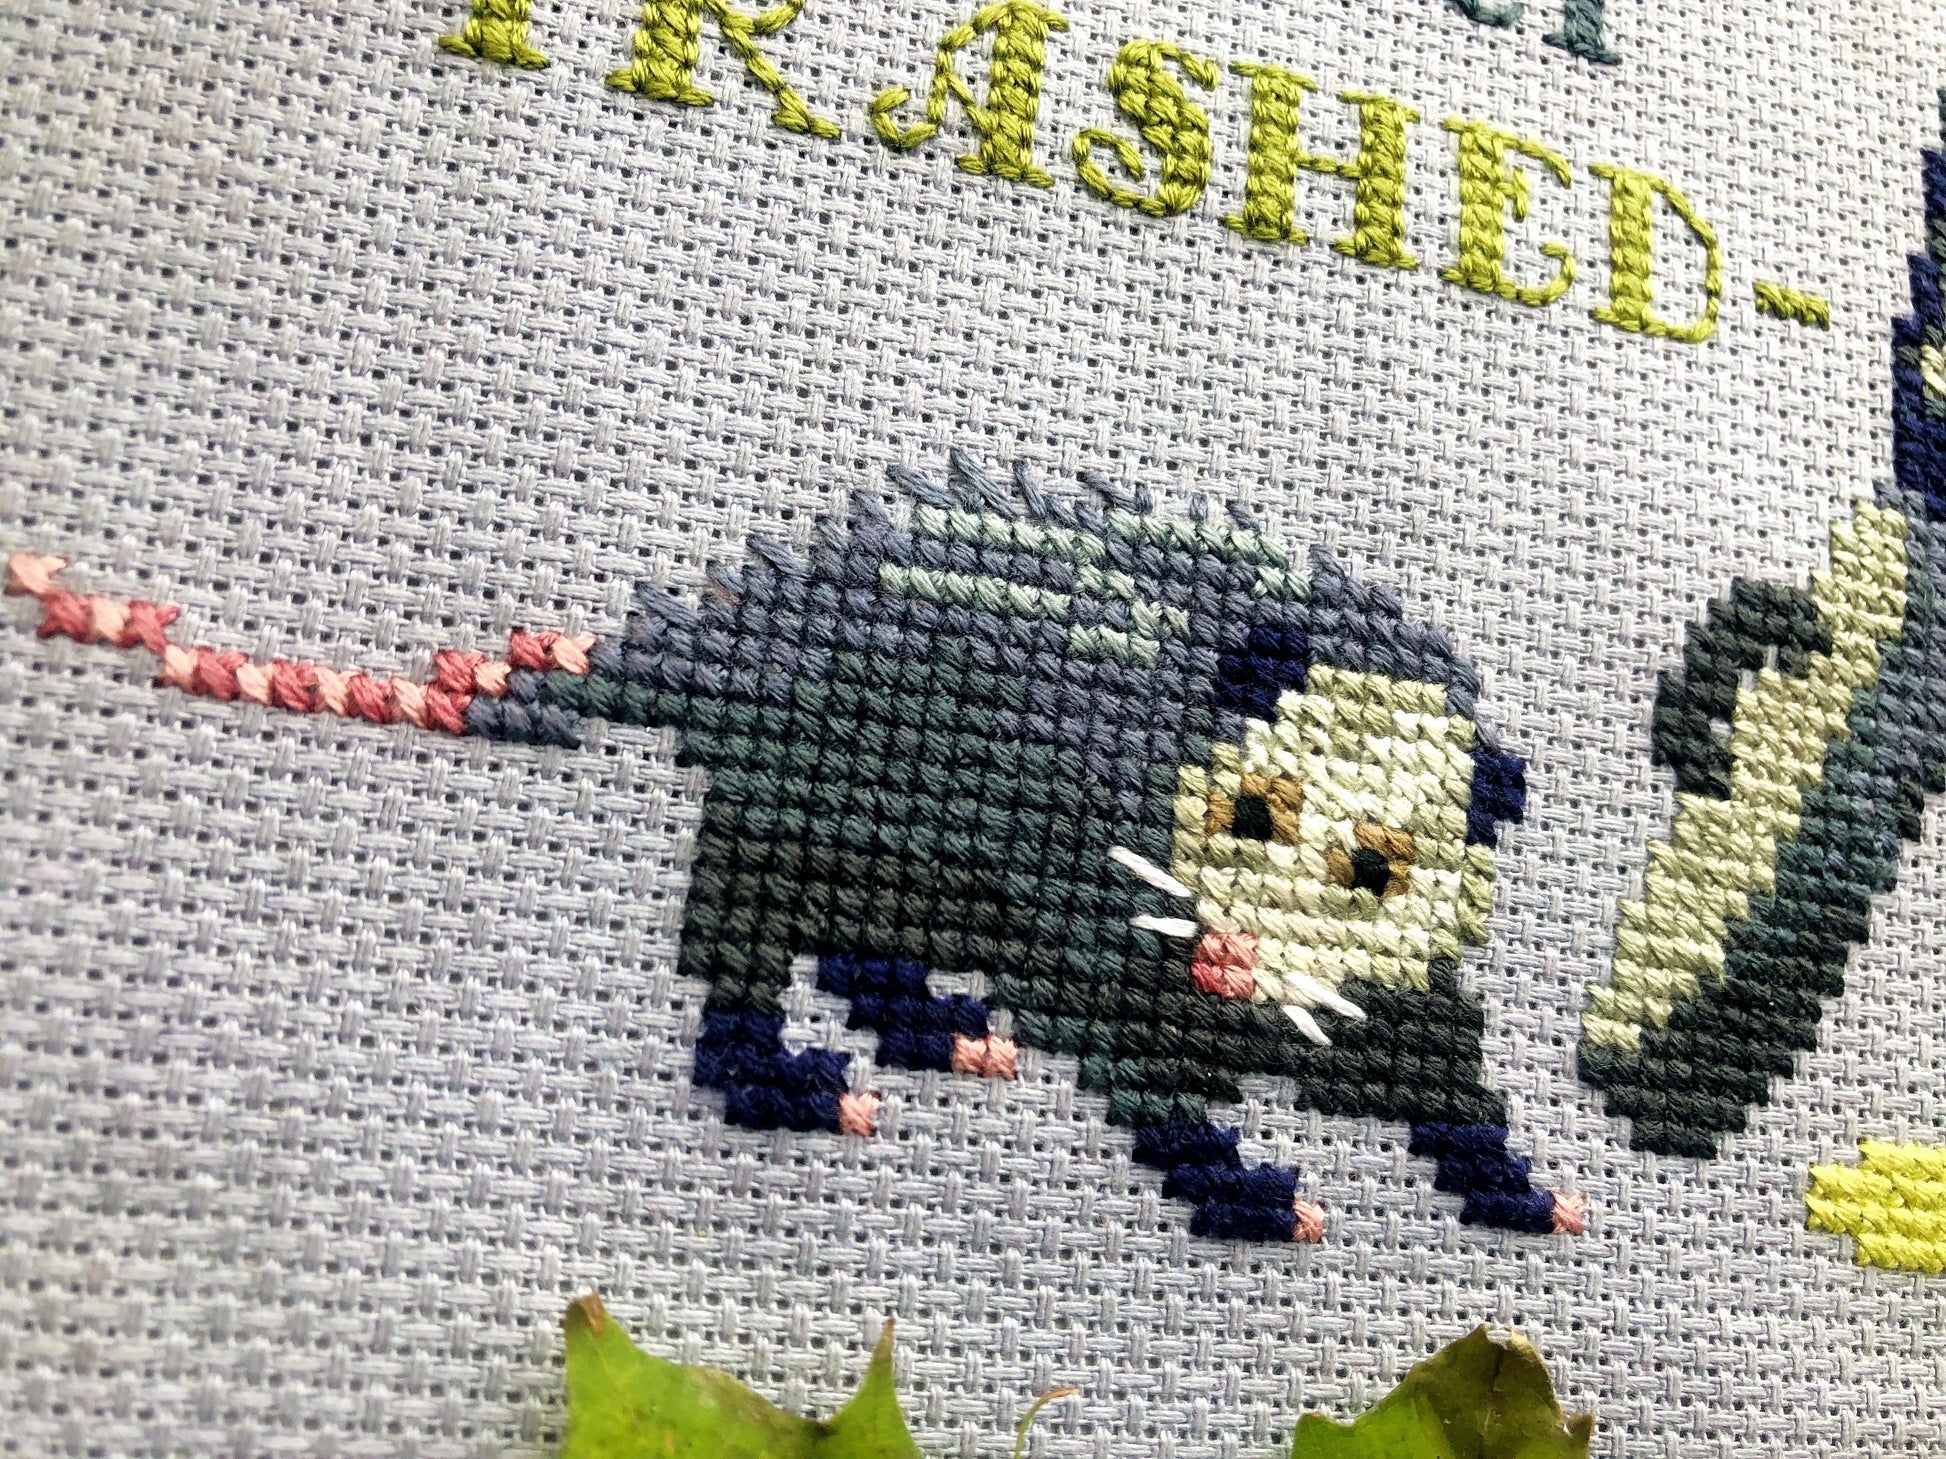 Let's Get Trashed Possum & Raccoon Cross Stitch Pattern - NeedleLot Designs